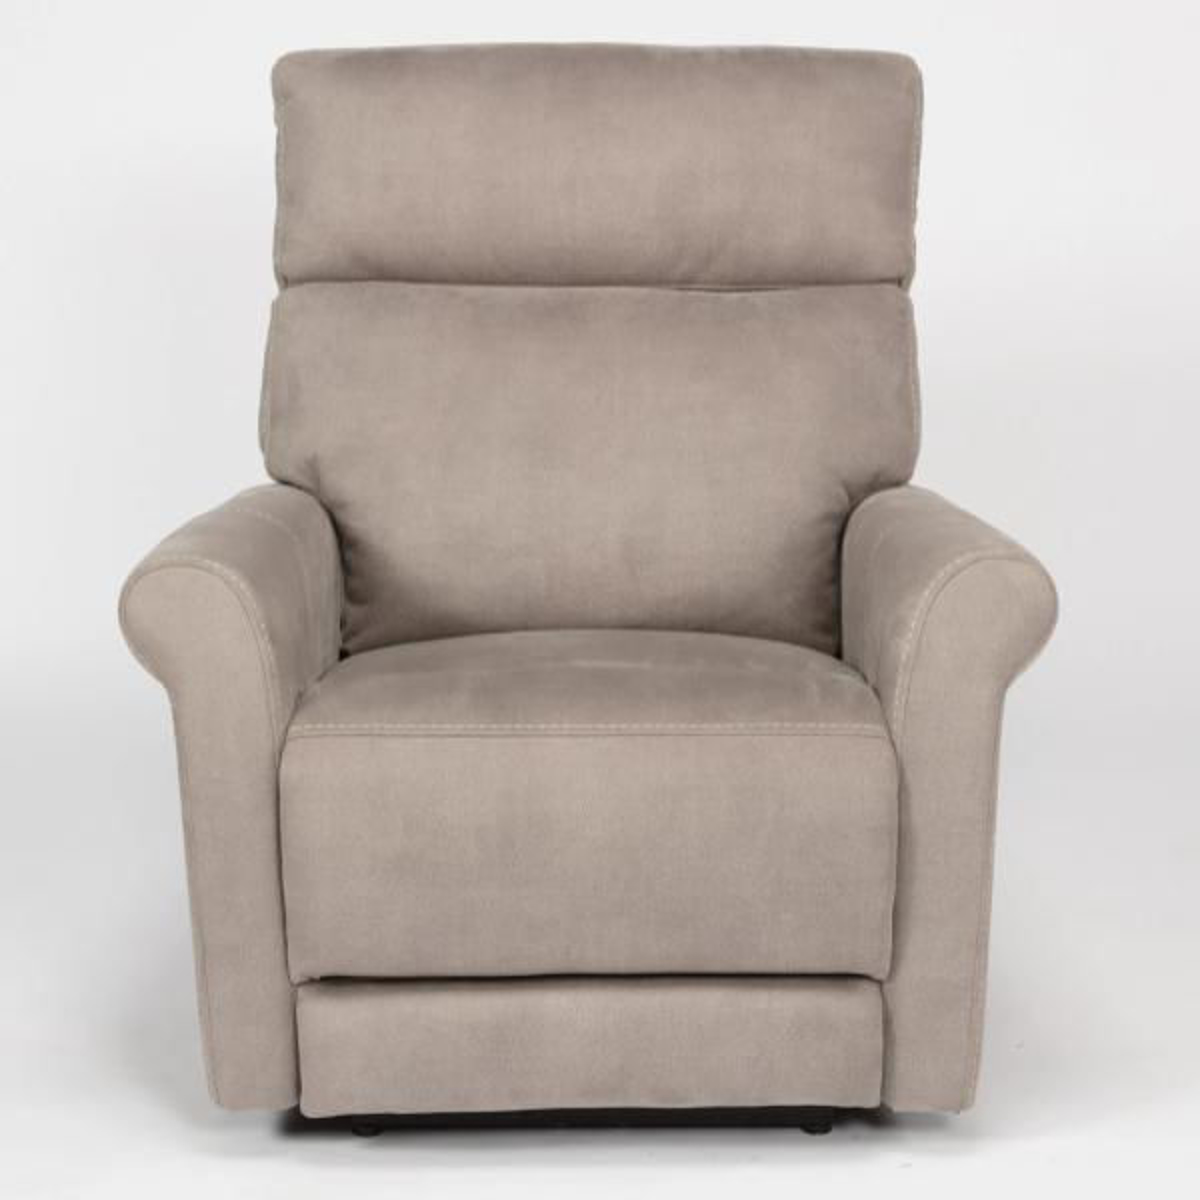 https://babettesonline.com/images/thumbs/0023771_owen-contemporary-power-recliner-with-power-headrest_1200.jpeg